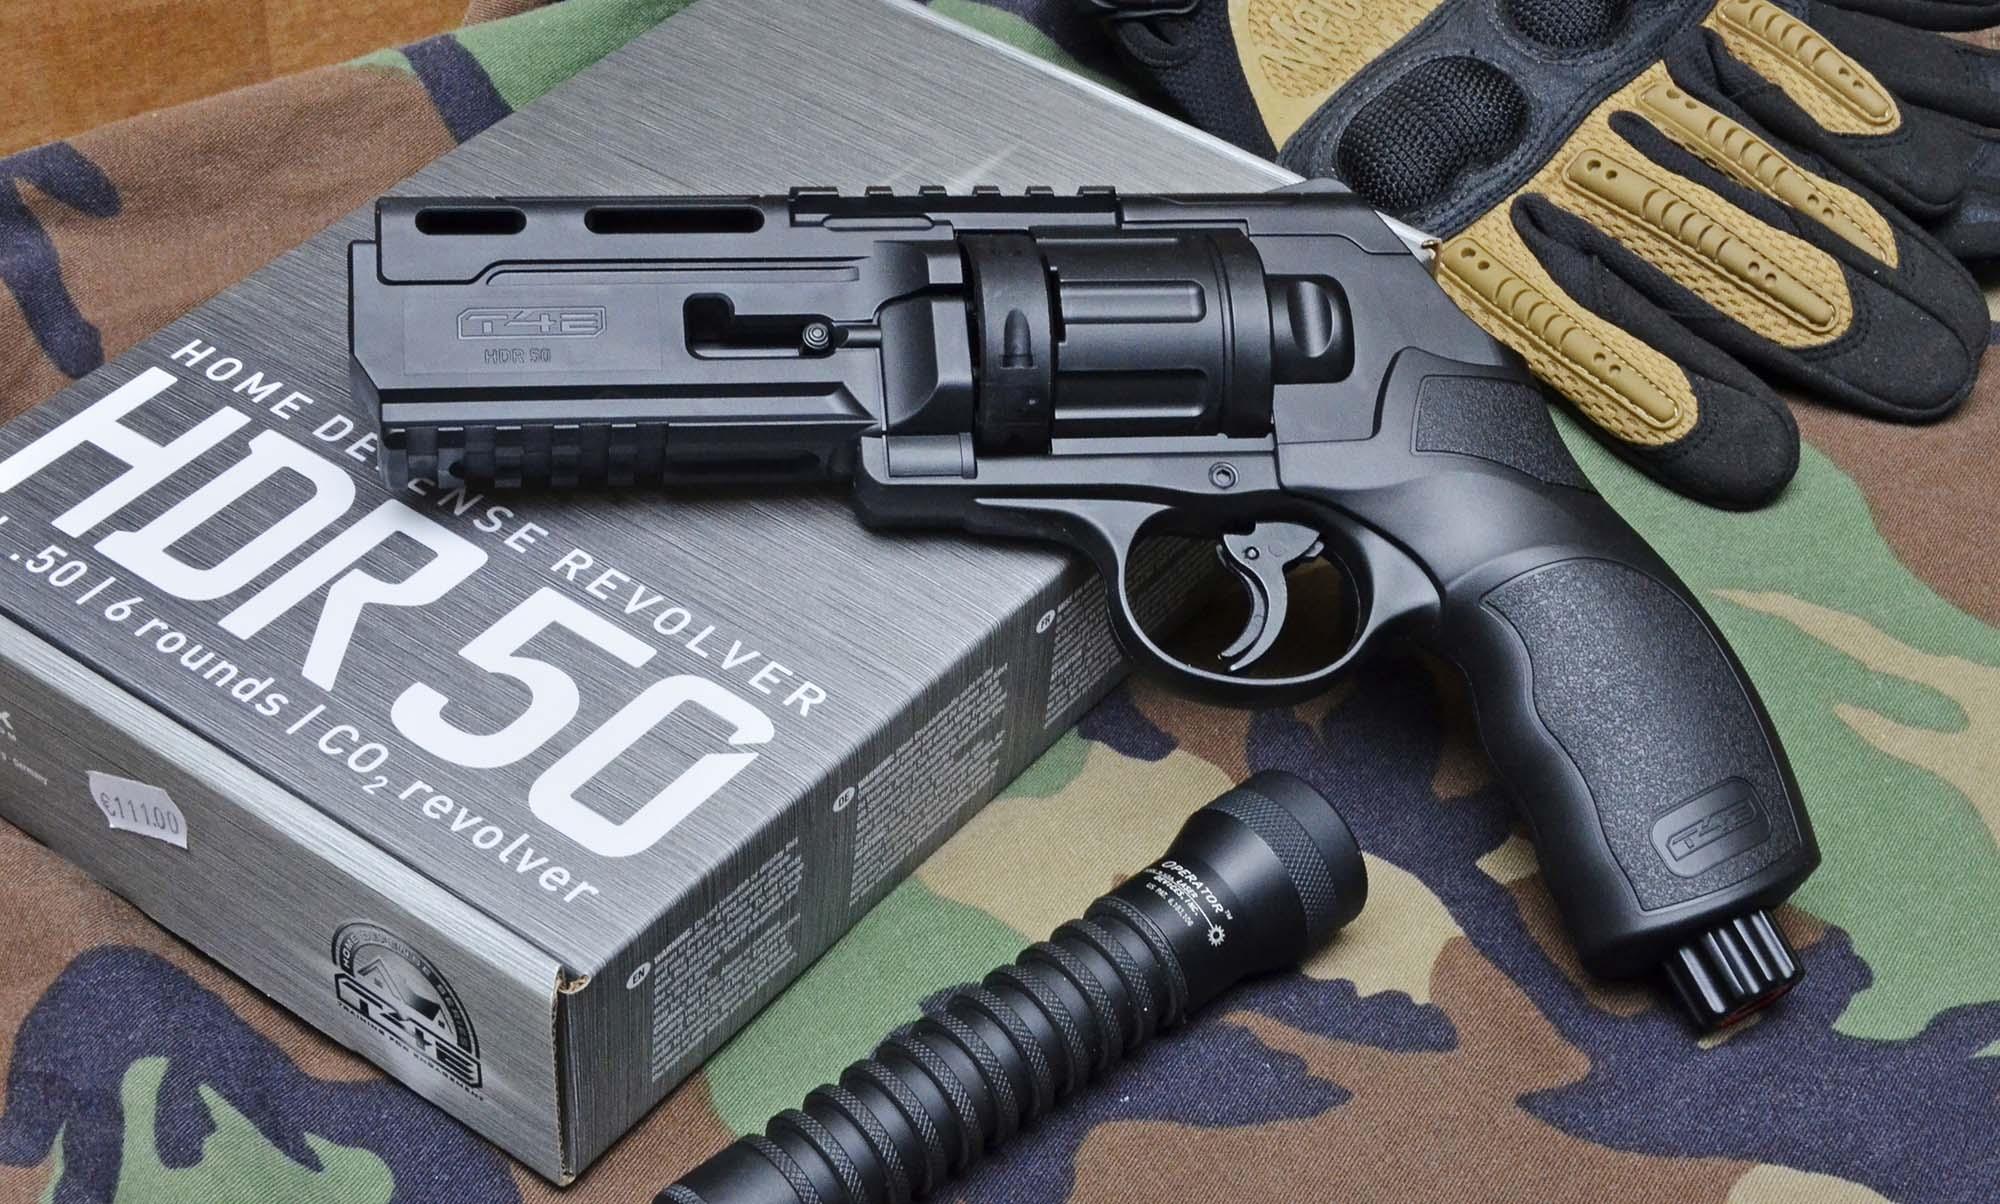 Umarex T4E HDR .50 caliber for home defense and informal target shooting.50